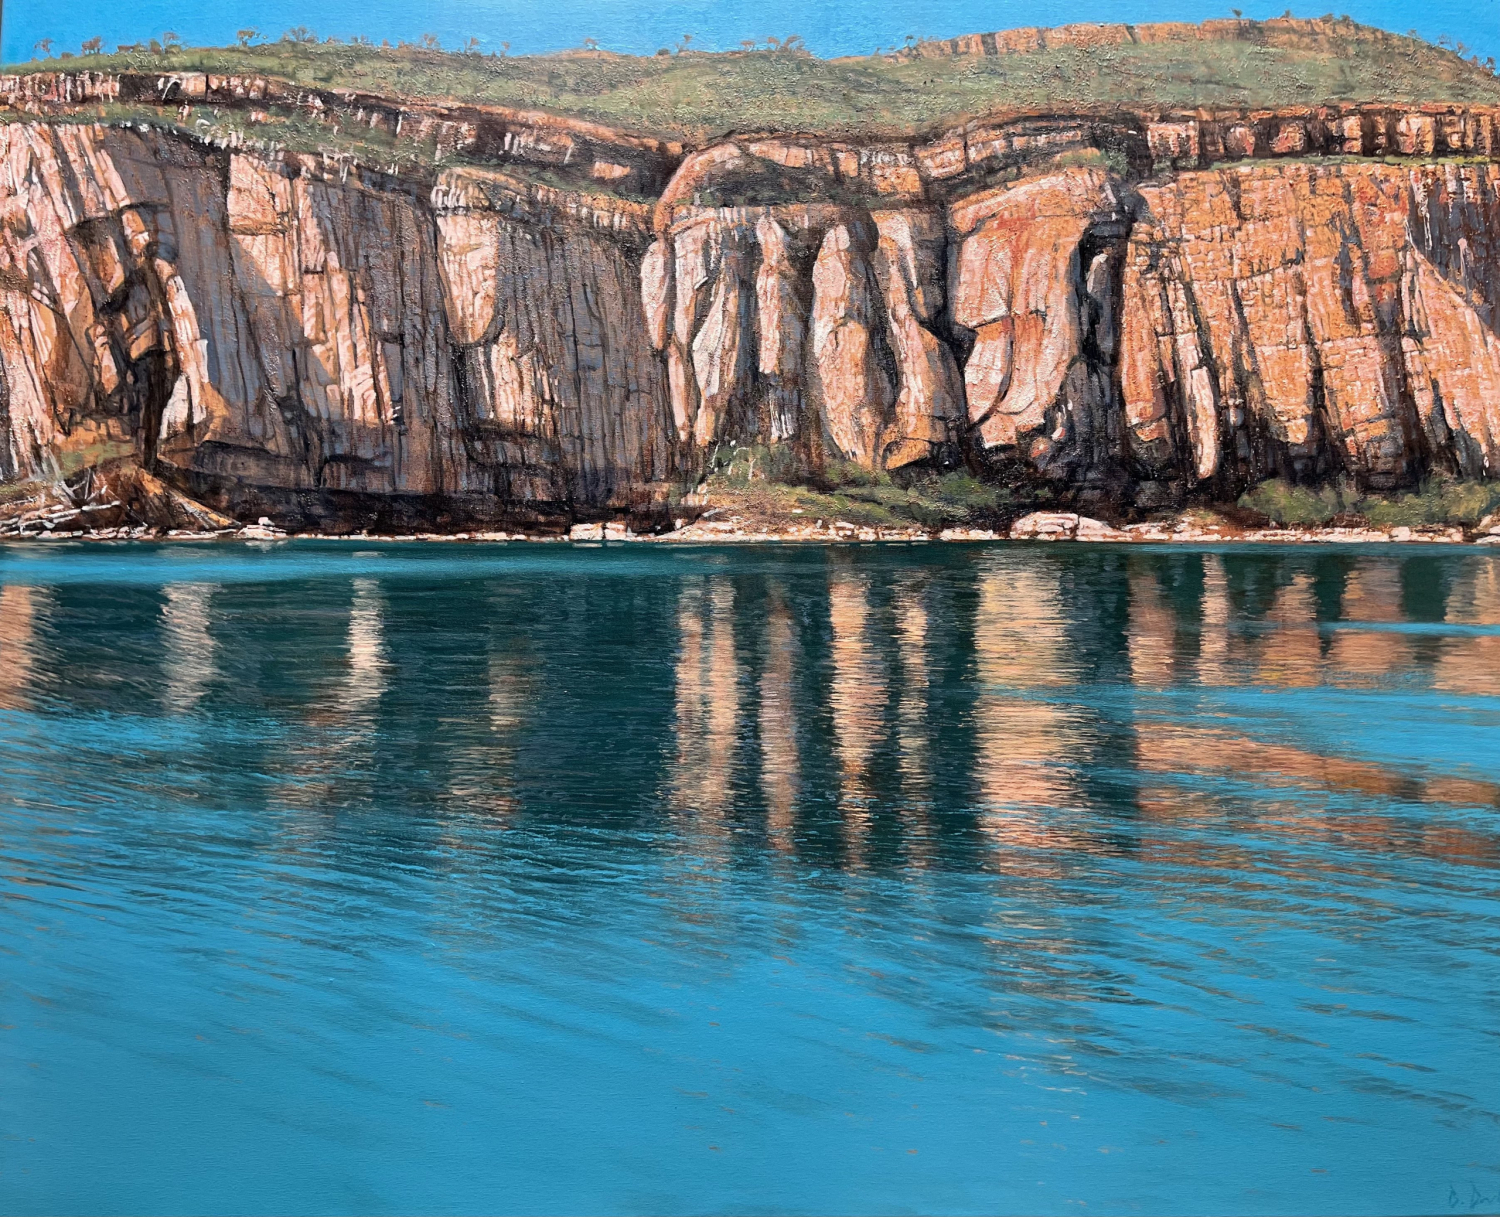 "Kimbolton Kimberley" Oil on Acrylic on Canvas 120x150cm